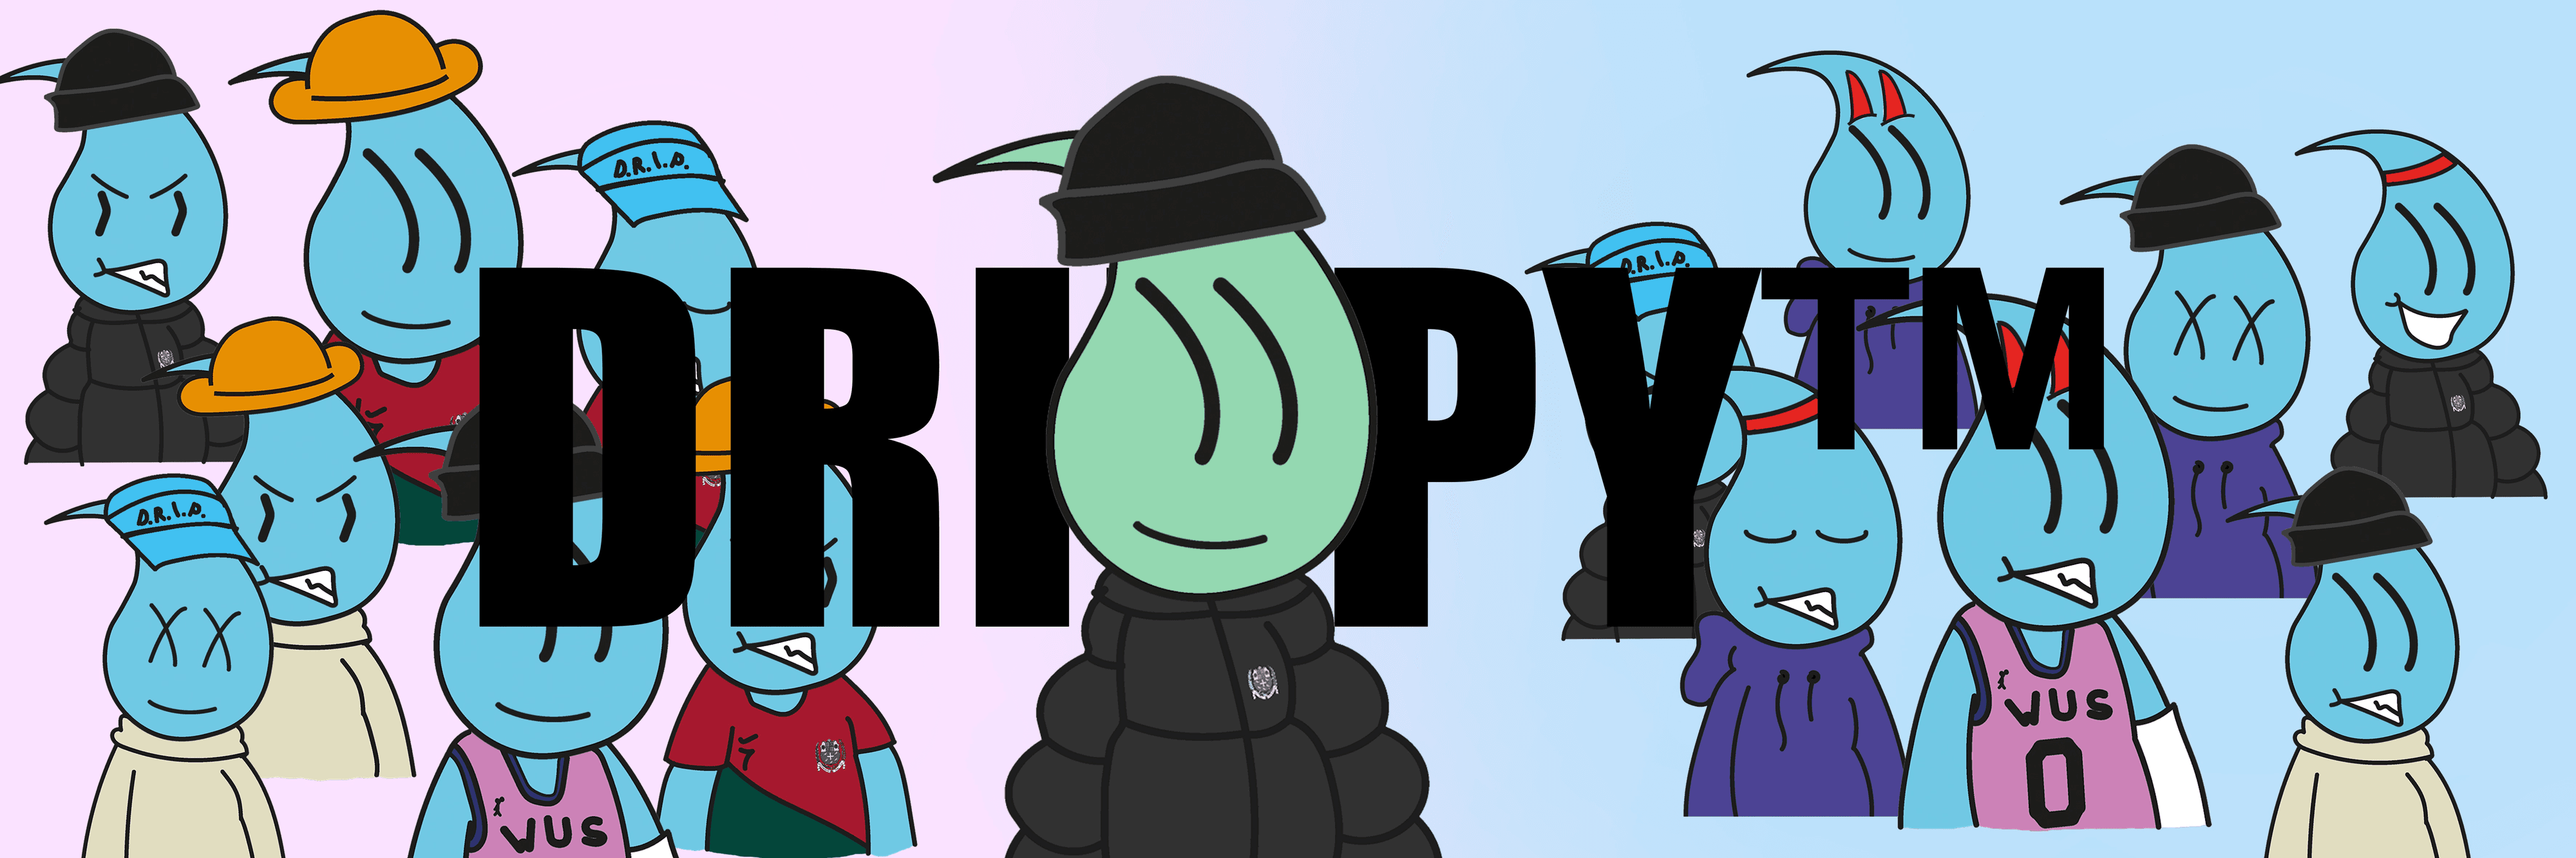 Drippy-Deployer bannière